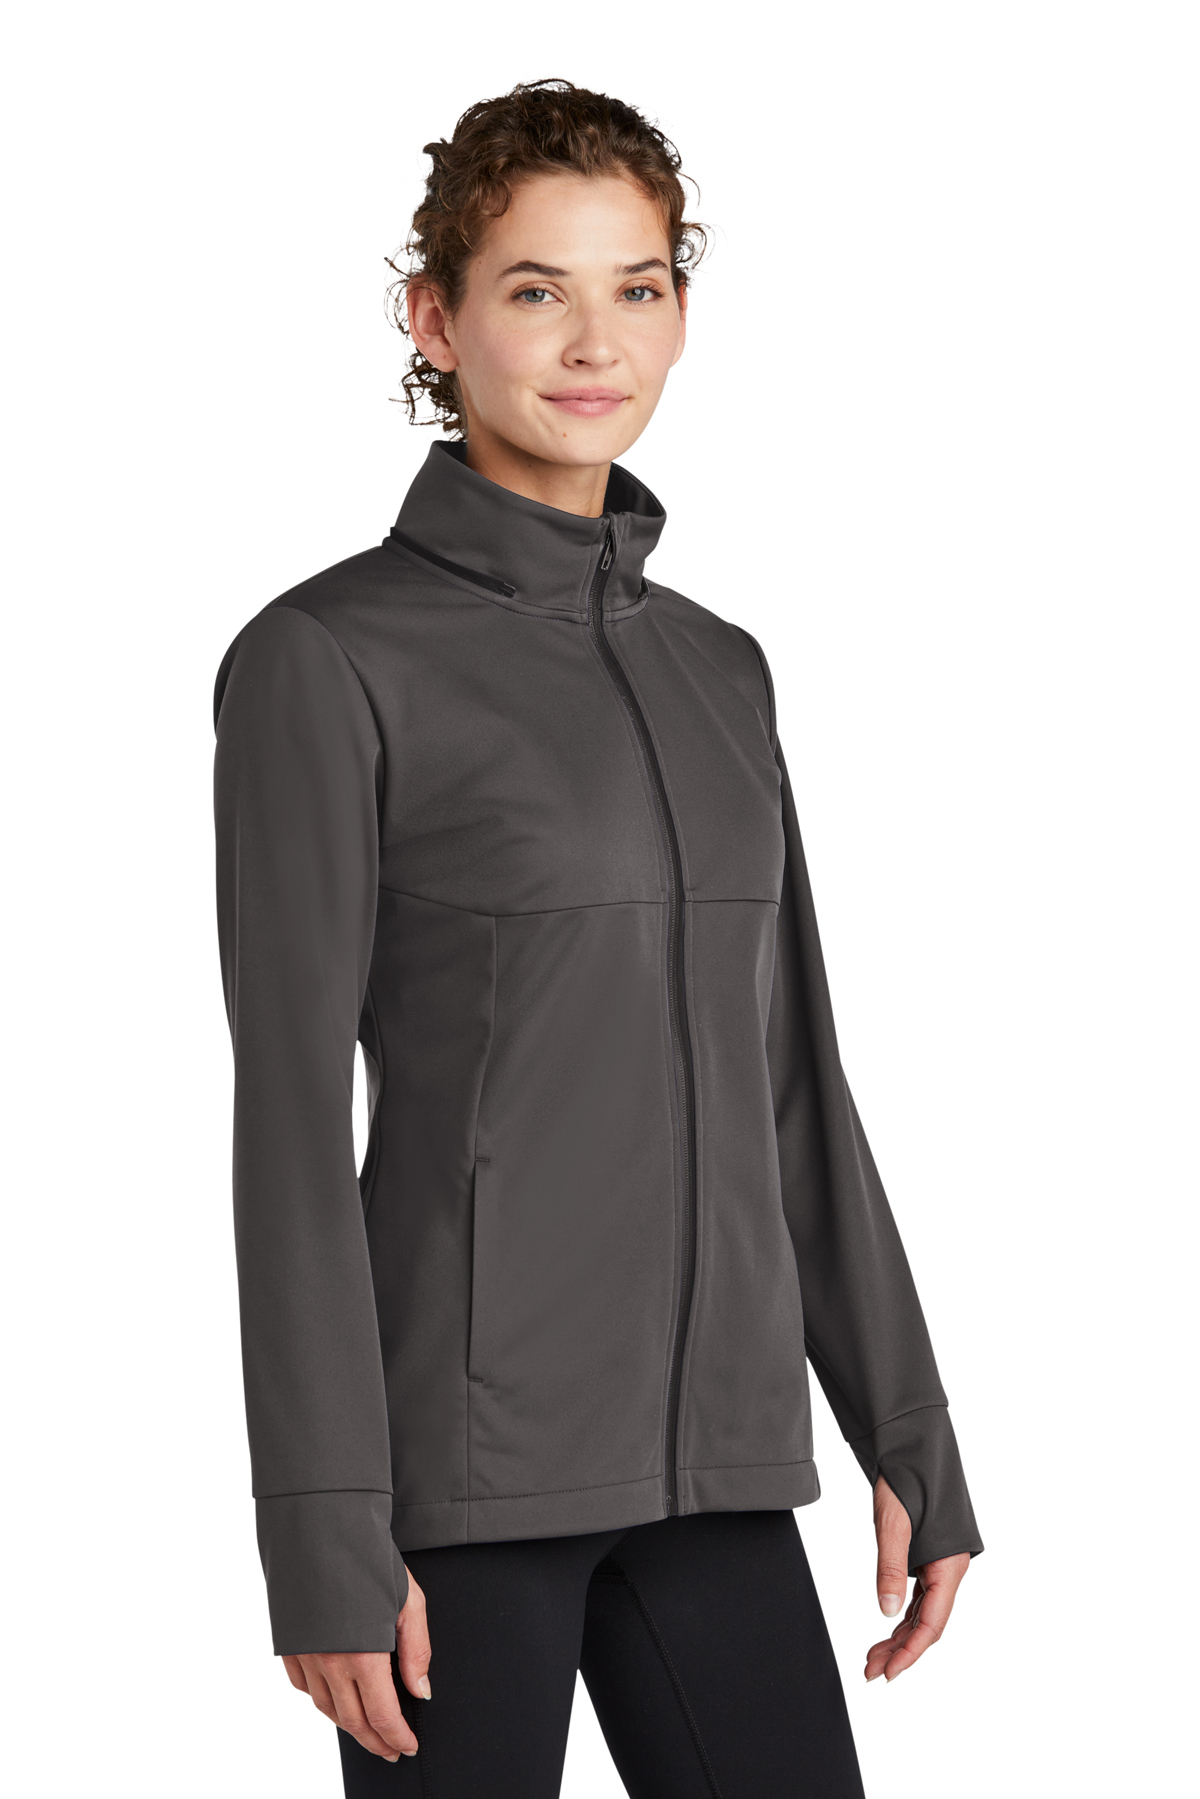 Sport-Tek Ladies Hooded Soft Shell Jacket | Product | Sport-Tek